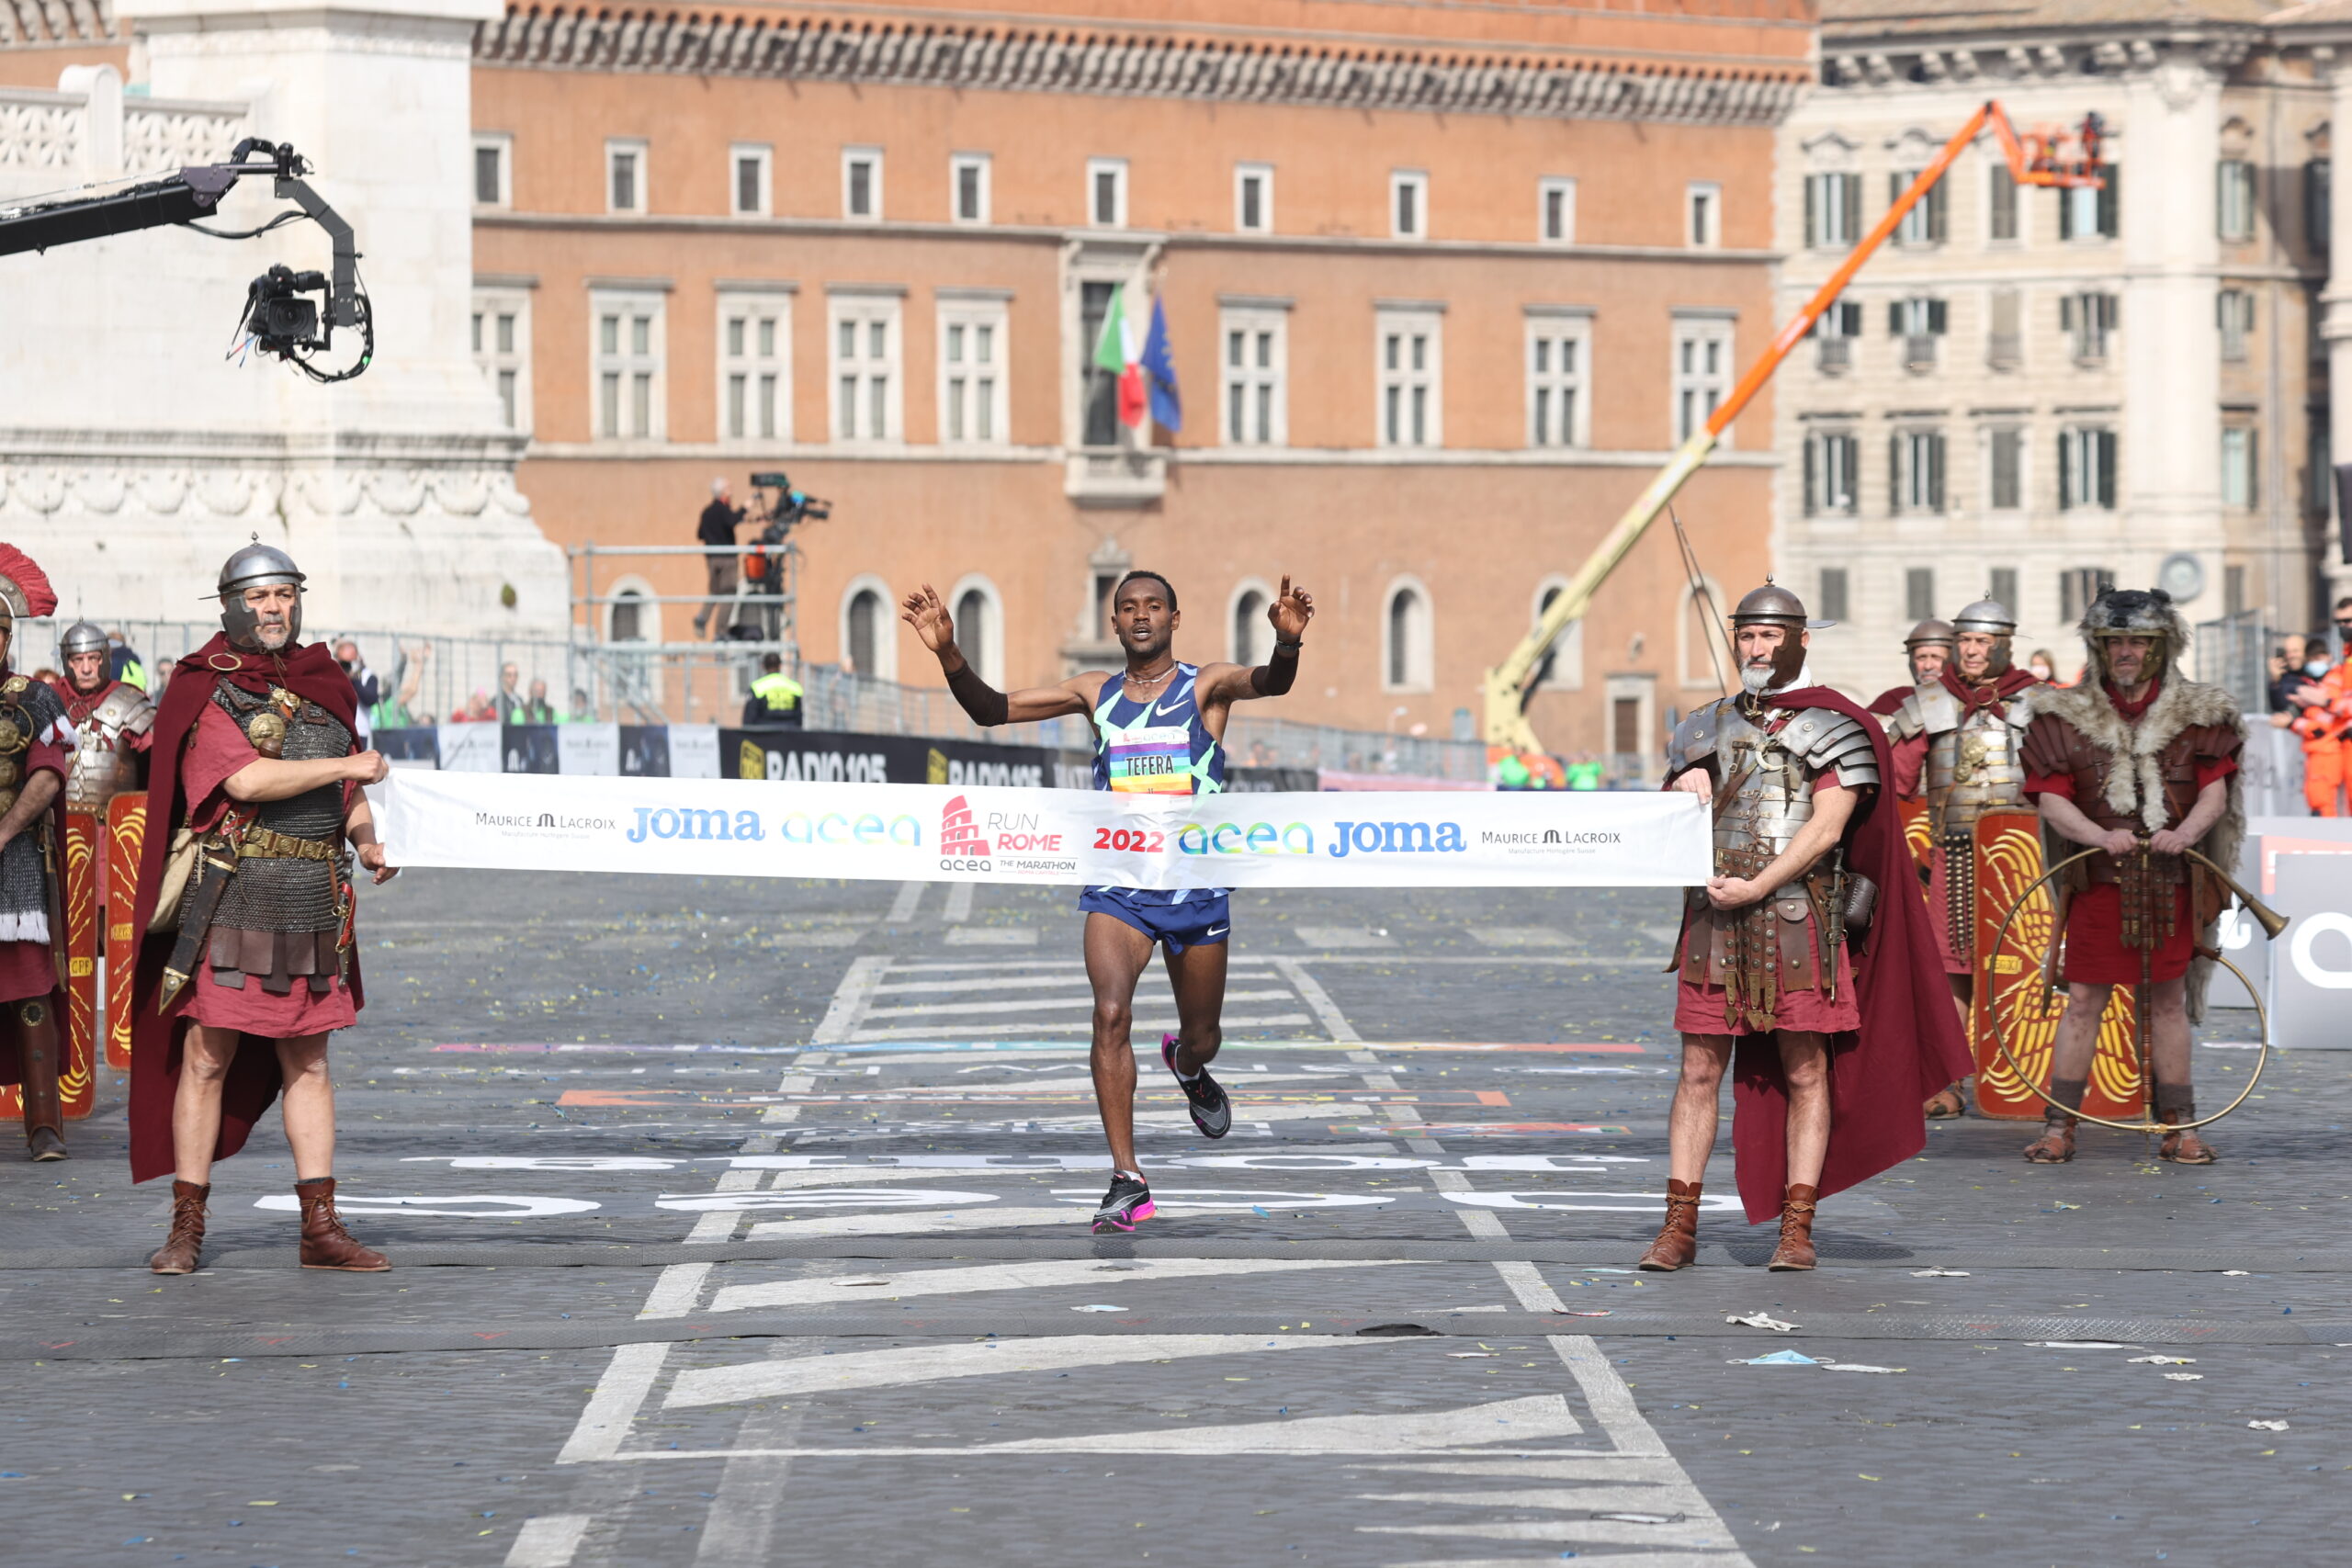 Top runners at Acea Run Rome The Marathon – Neka Crippa and Stefano La Rosa for Italy